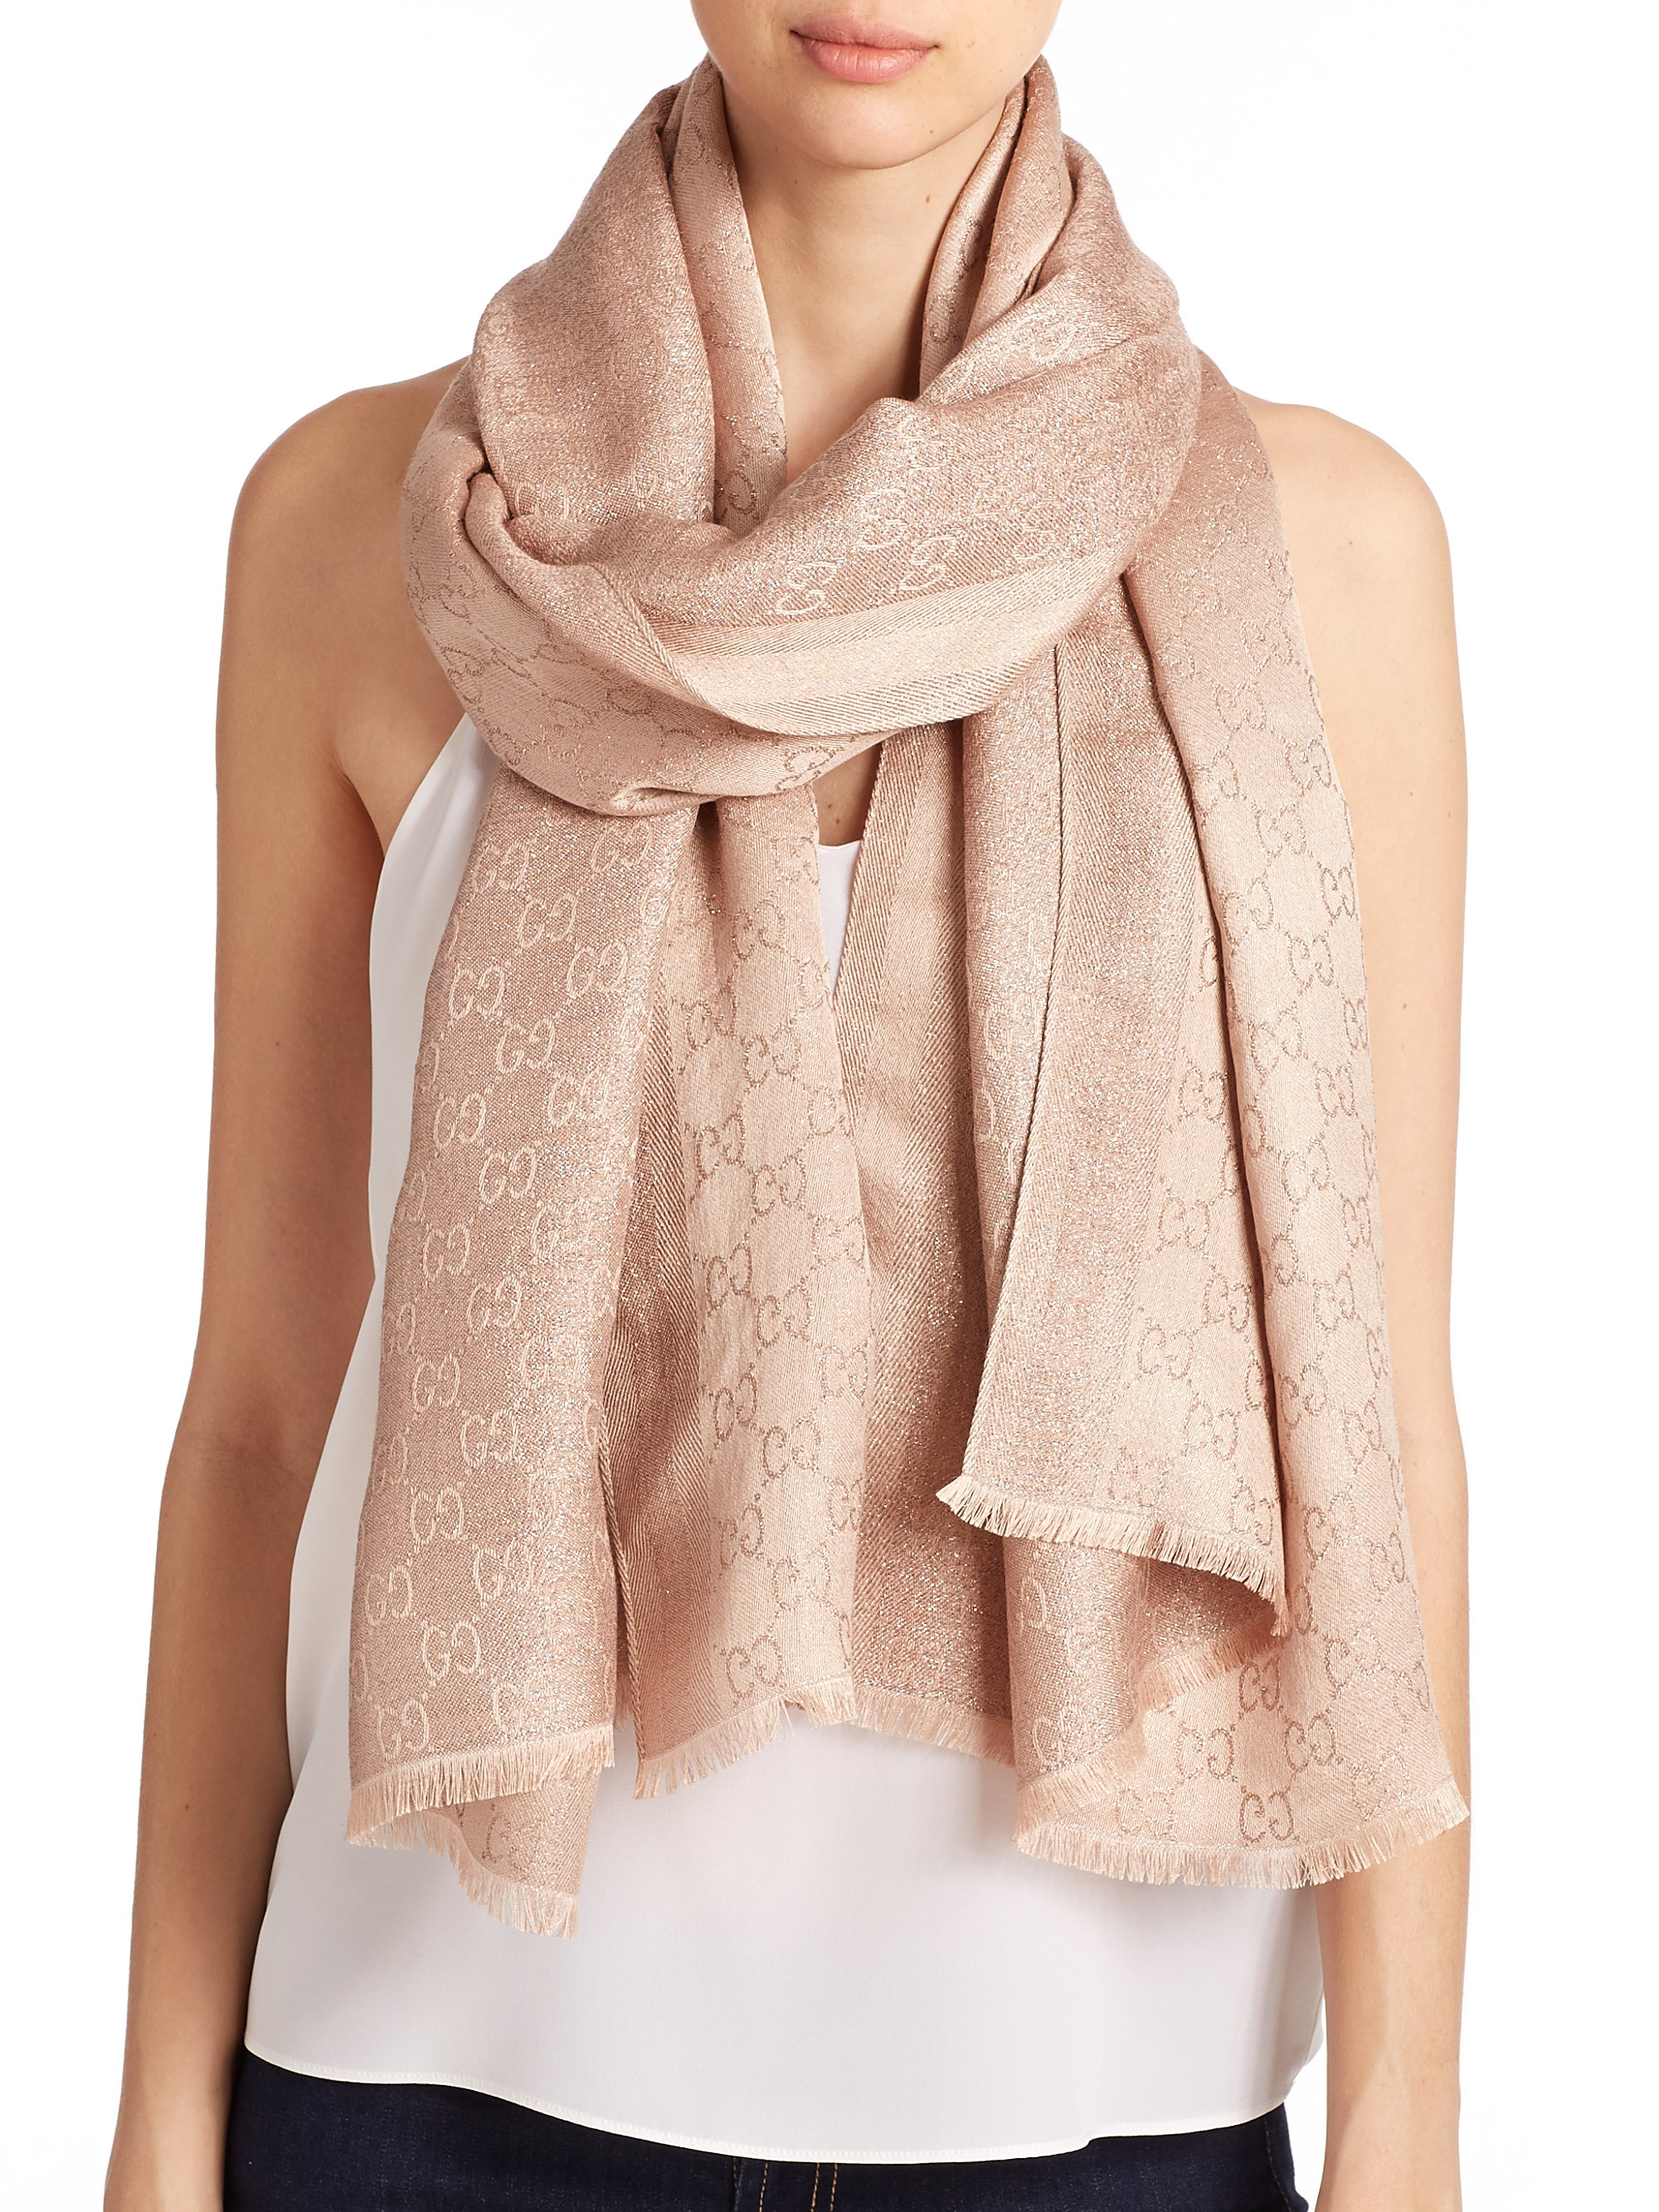 pink gucci scarf